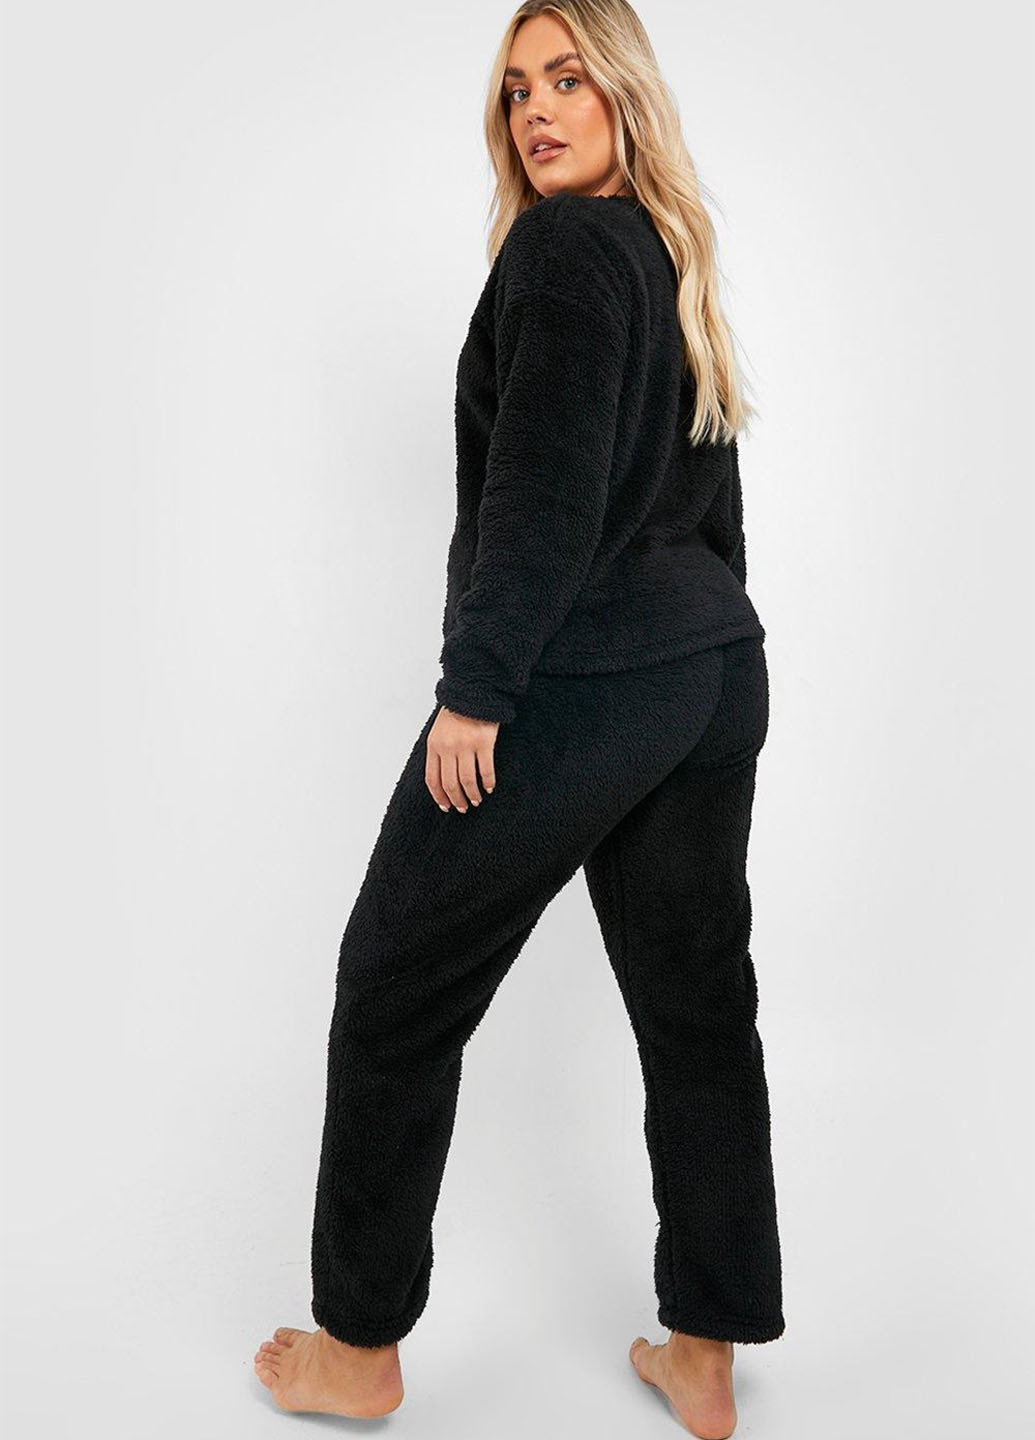 Черная всесезон пижама (свитшот, брюки) свитшот + брюки Boohoo